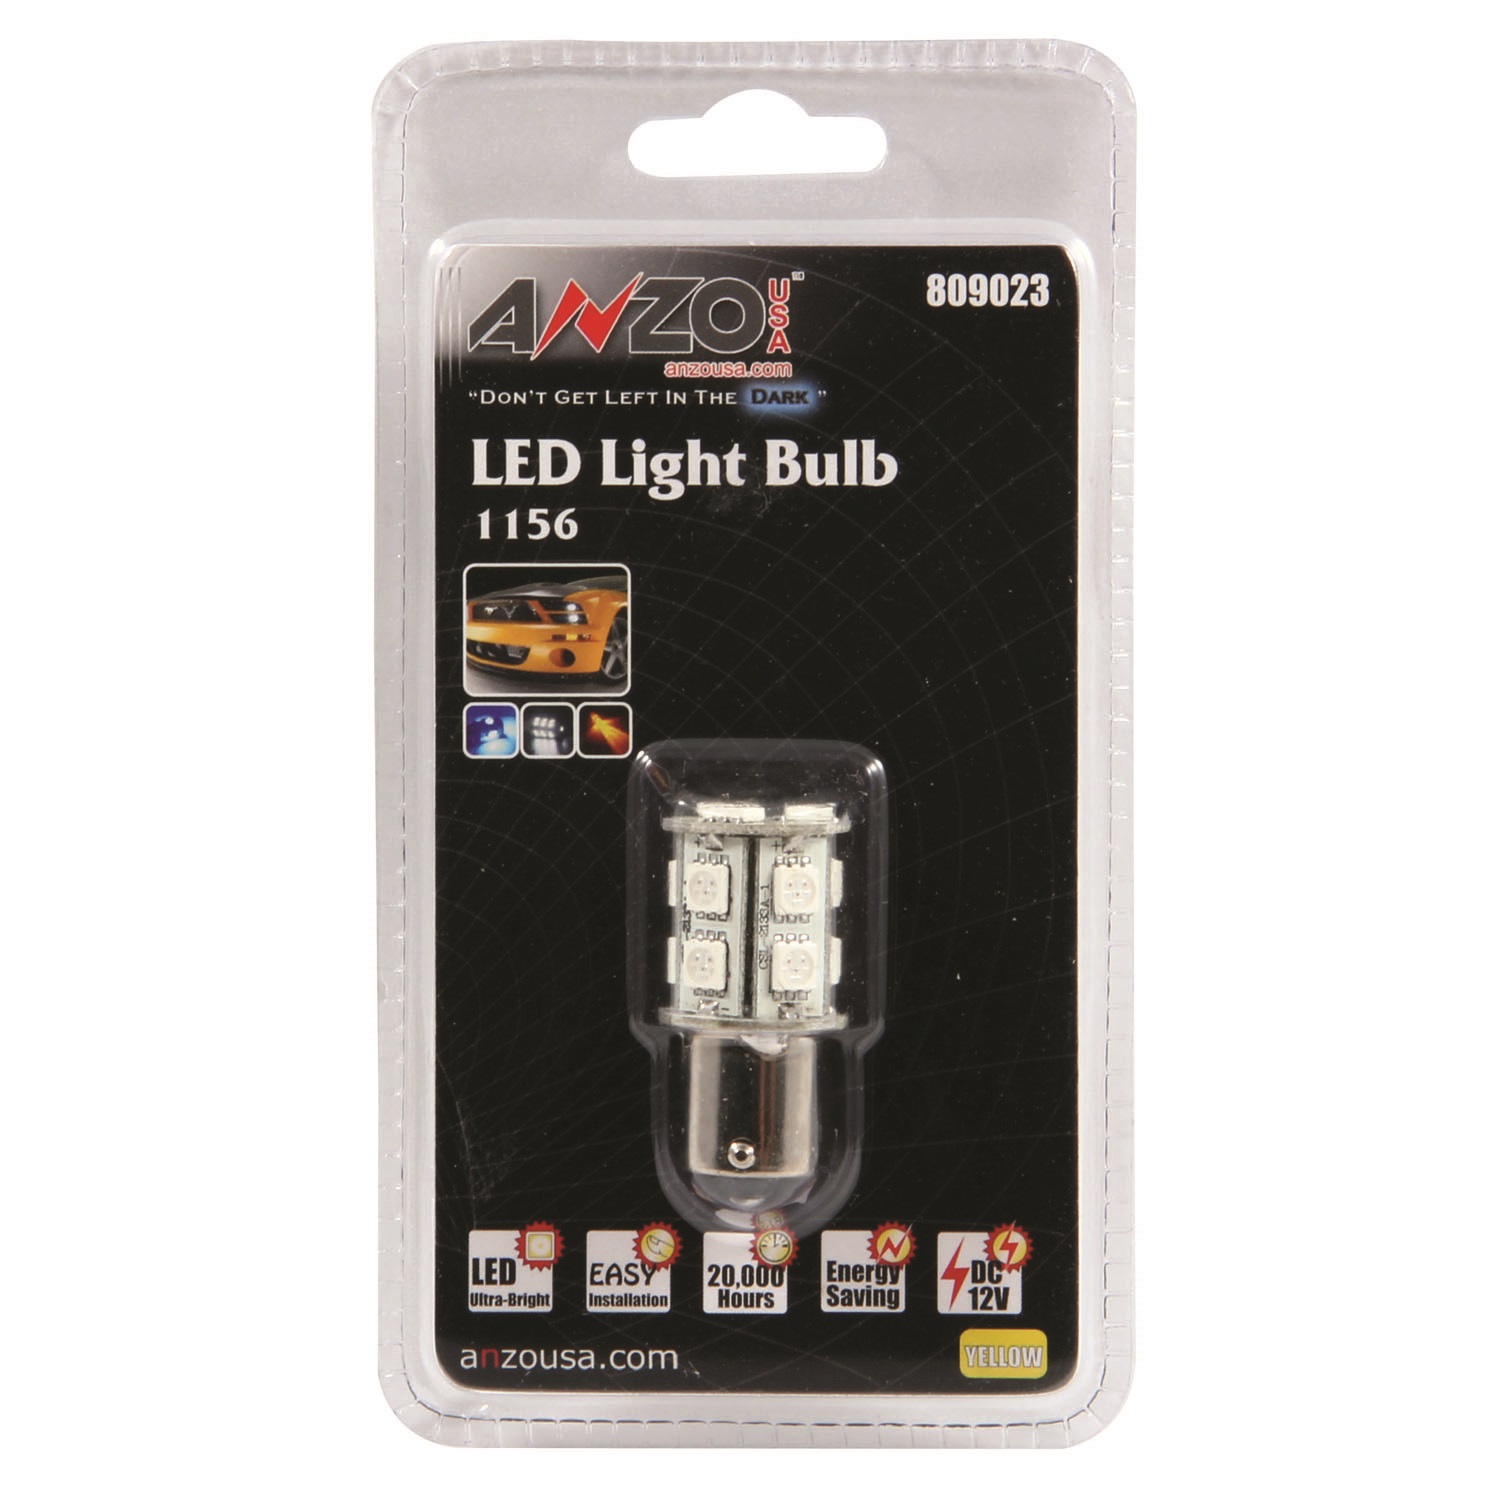 Anzo USA Anzo USA 809023 LED Replacement Bulb